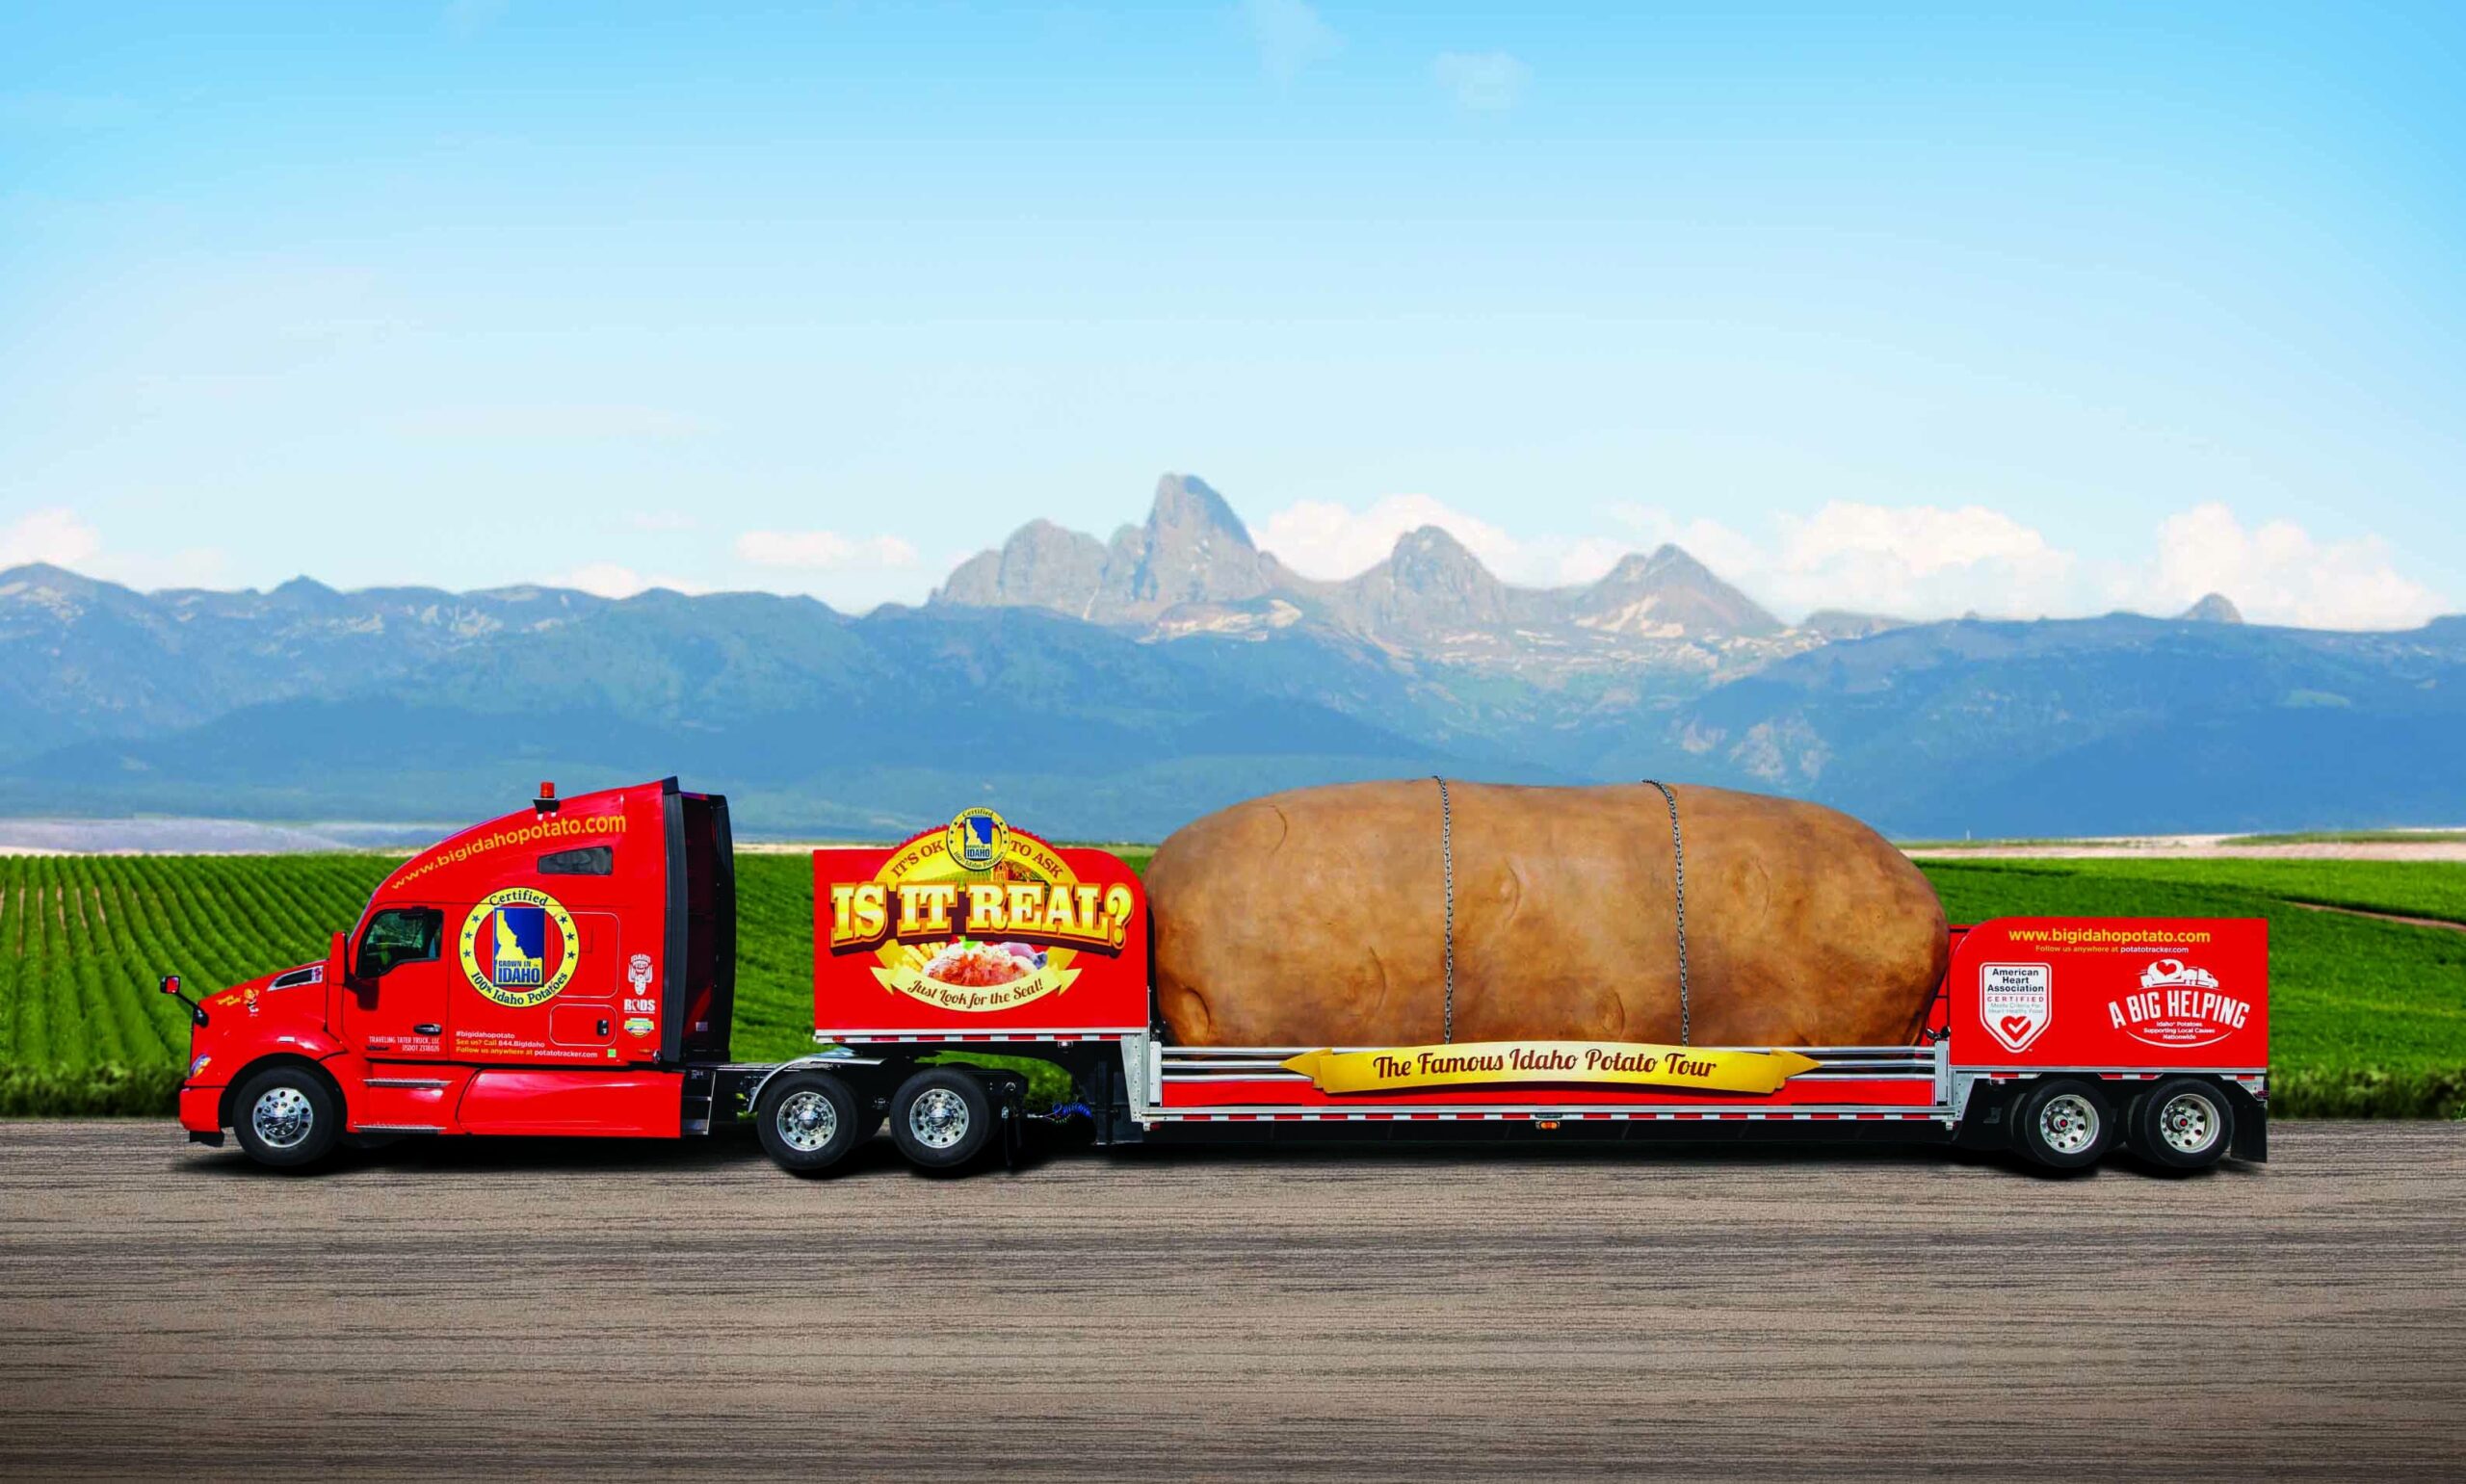 Big Idaho Potato – Famous Idaho Potato Tour